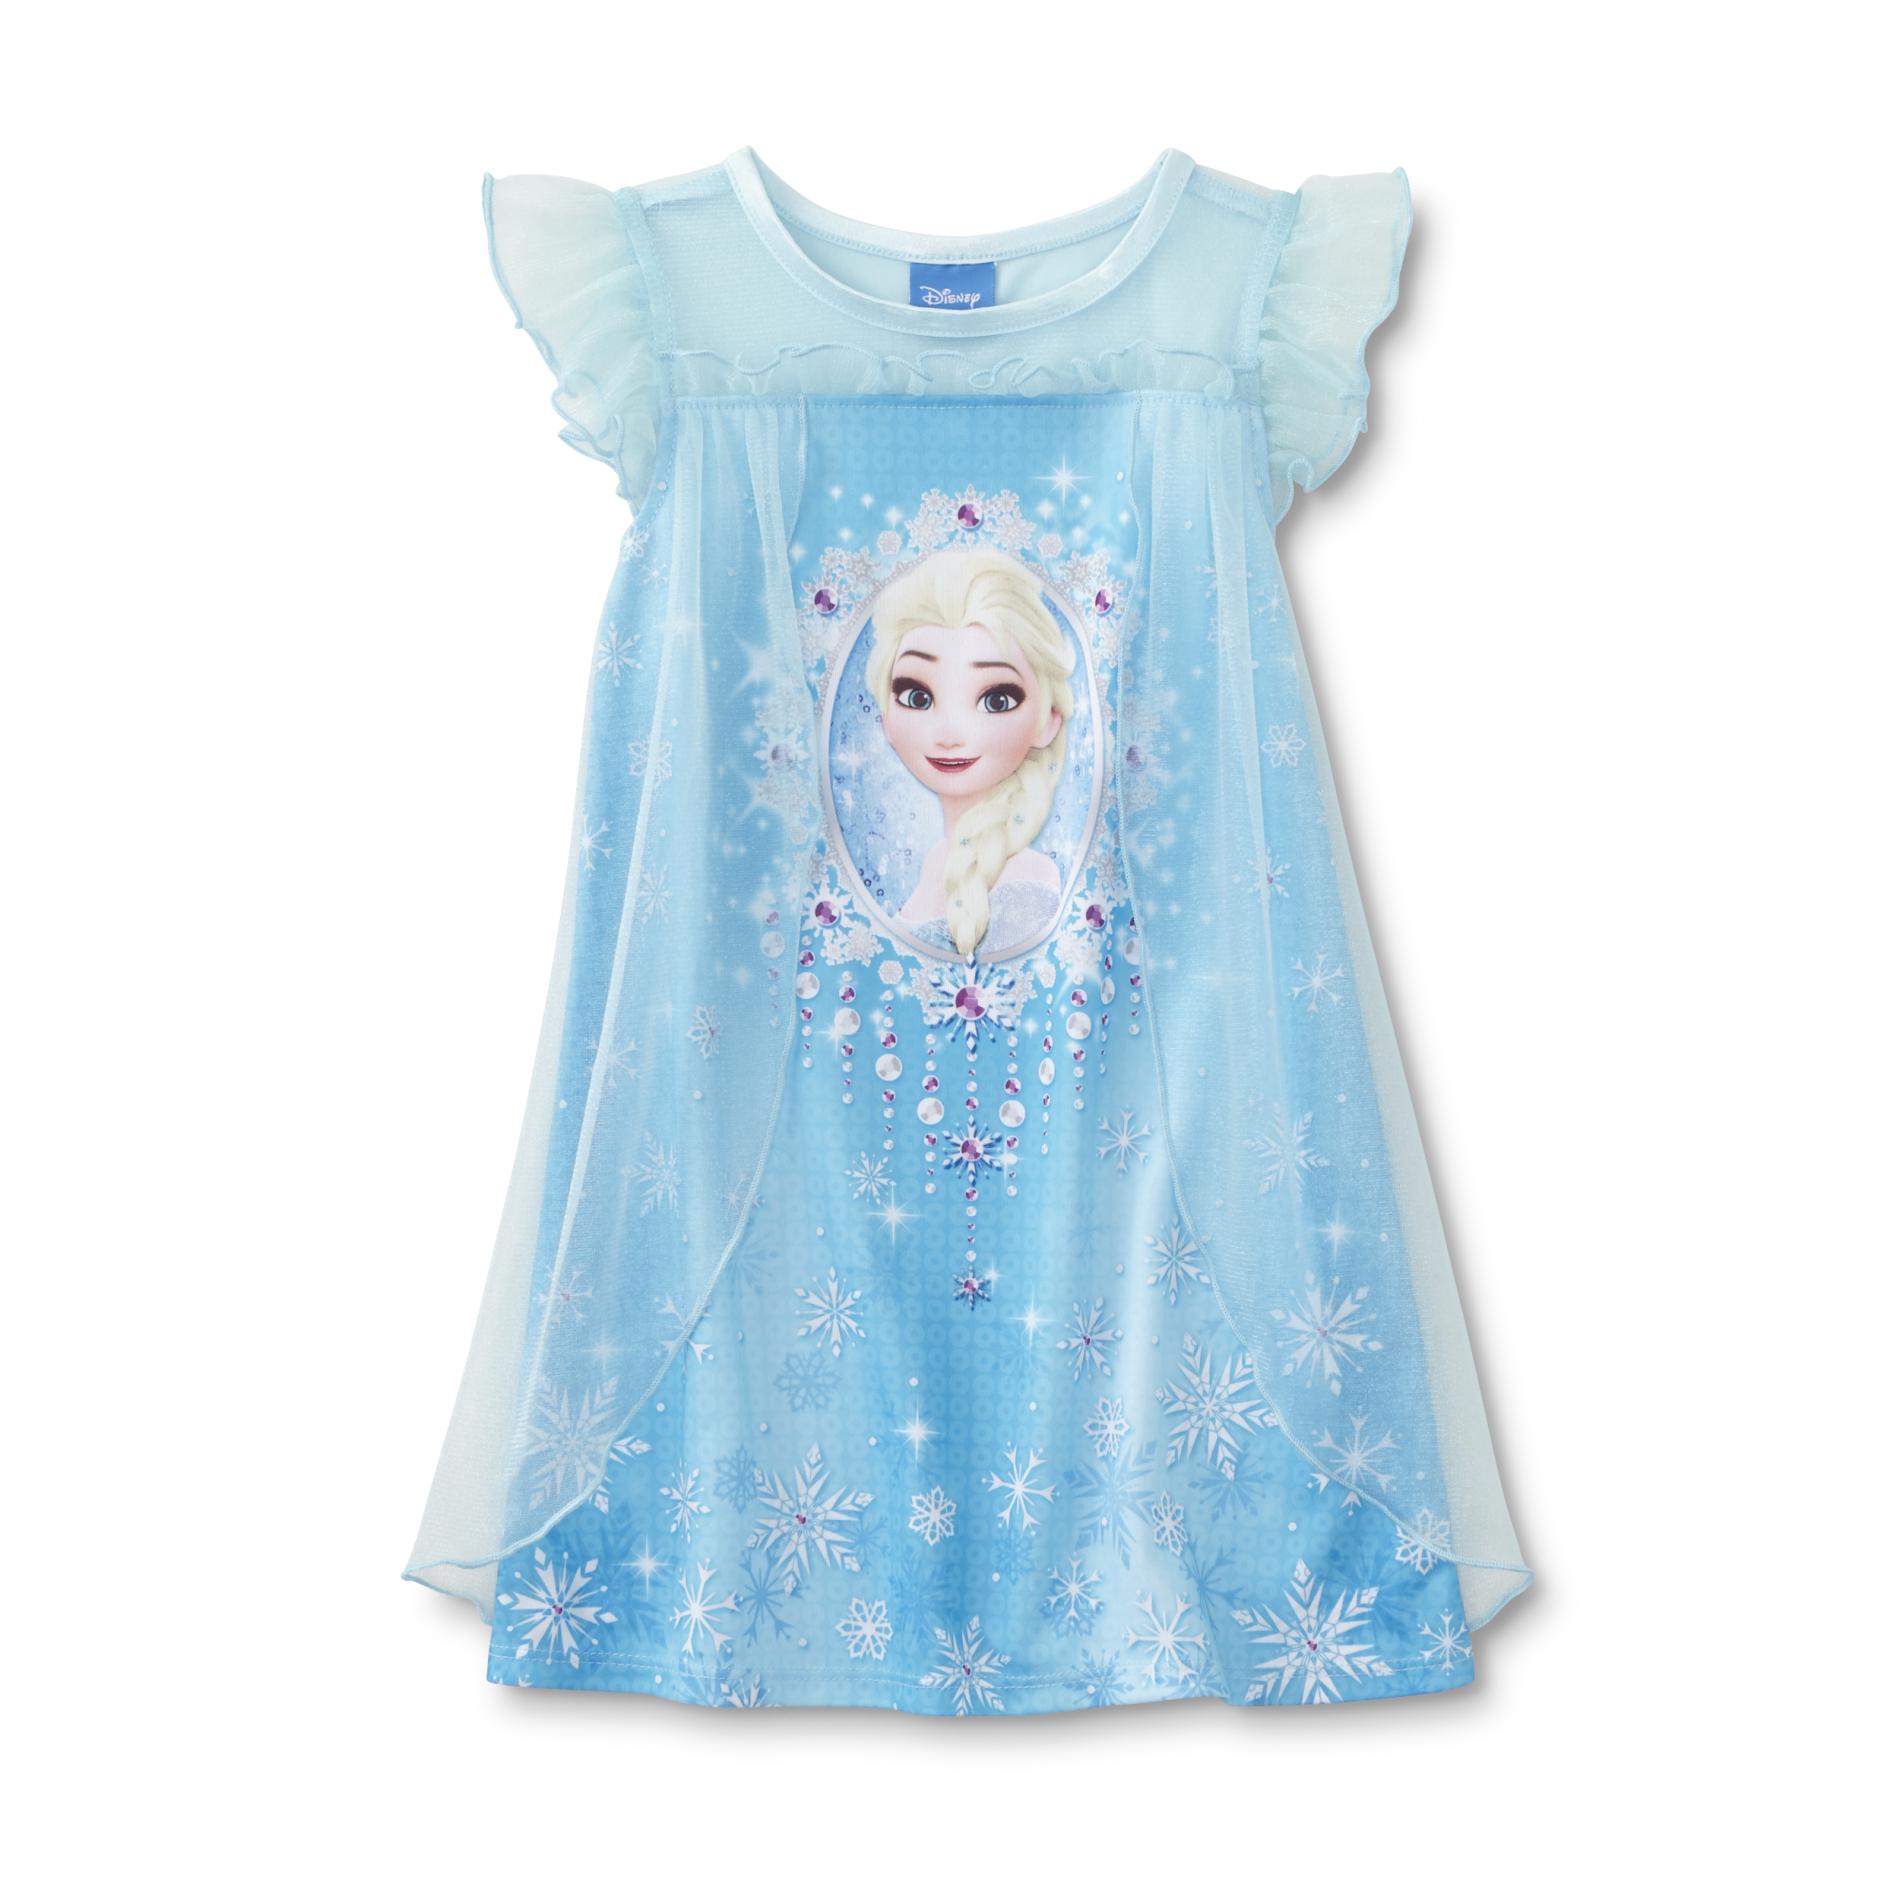 Disney Frozen Toddler Girl's Nightgown